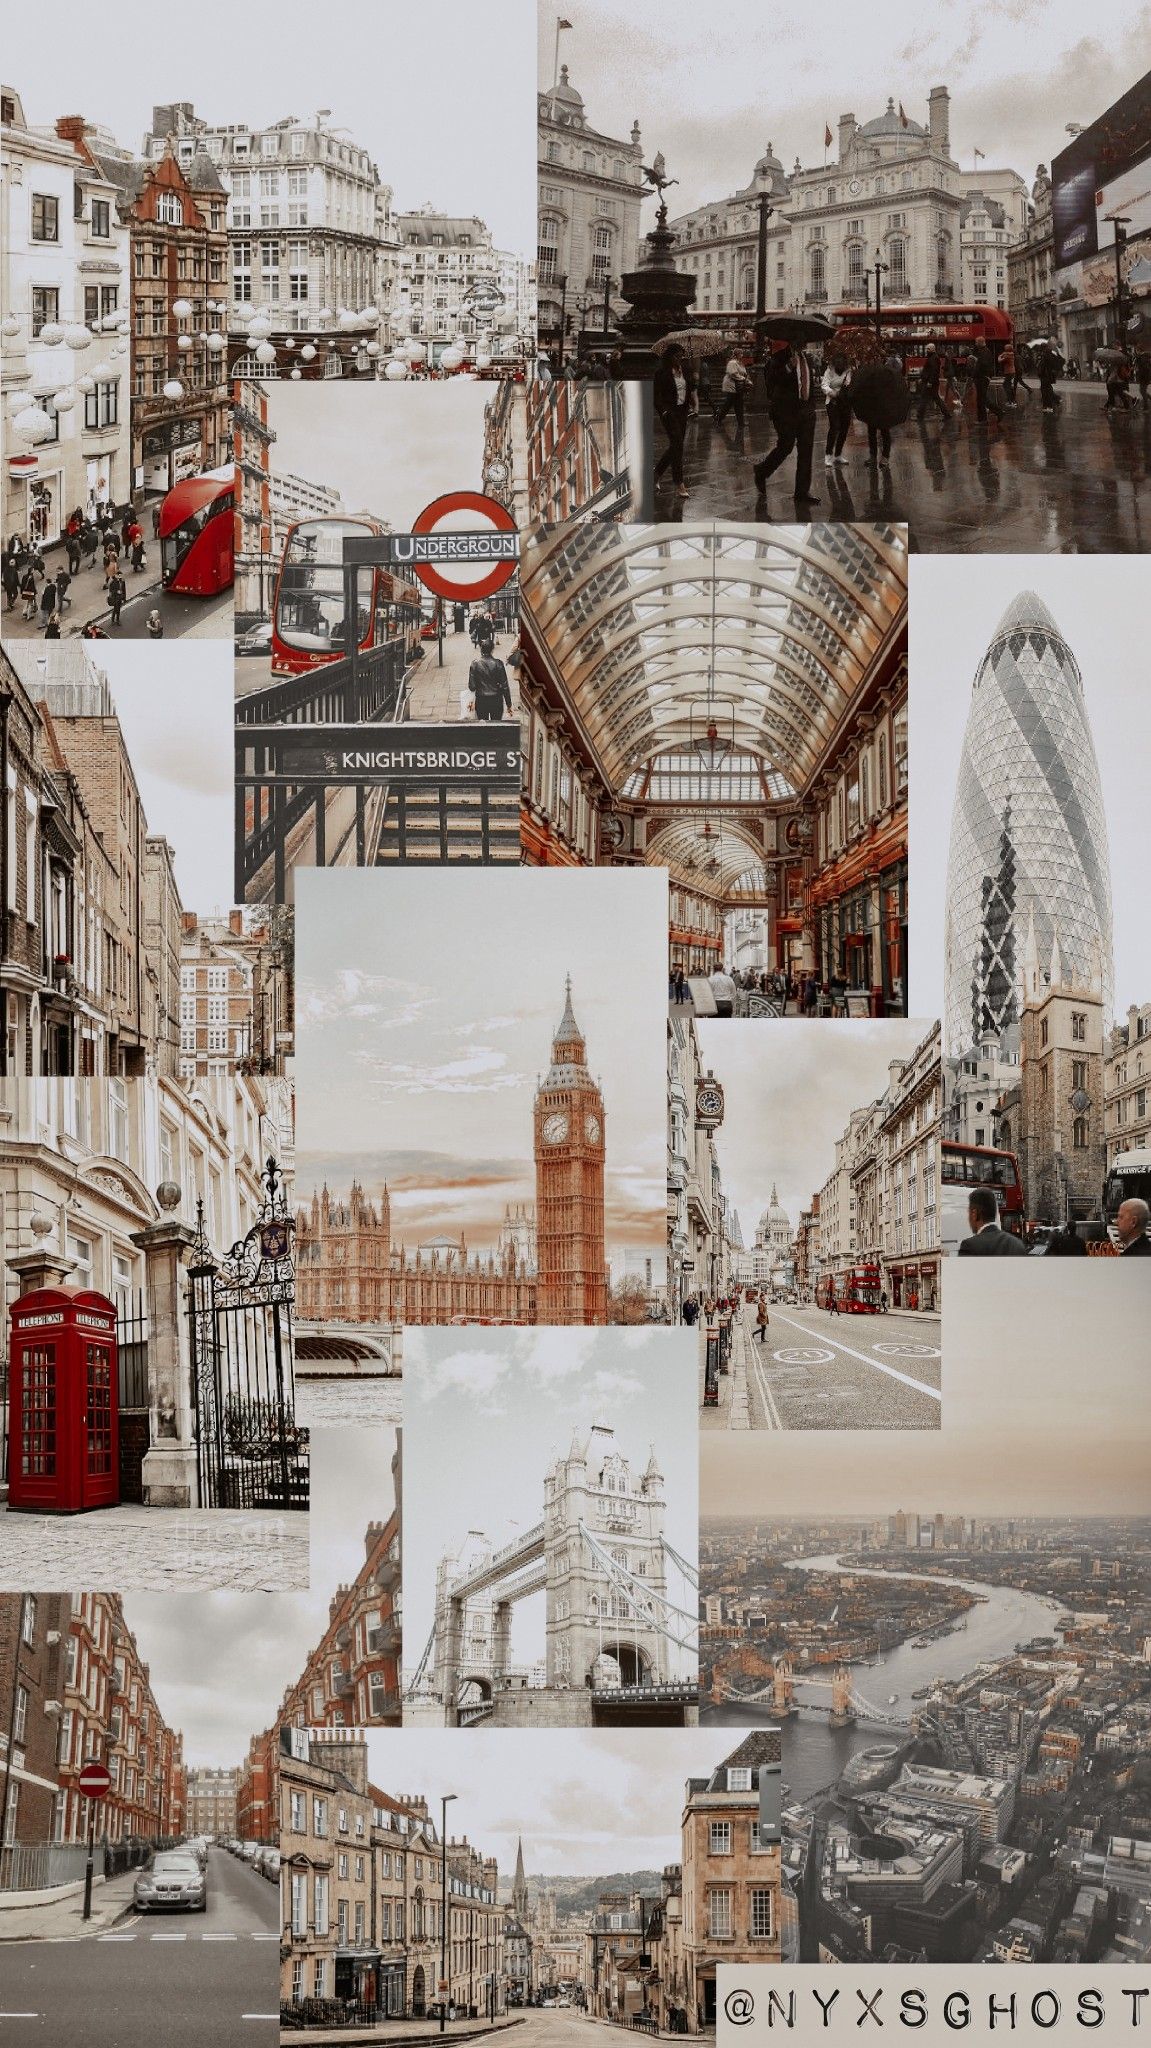 London Aesthetic Wallpaper. London wallpaper, London aesthetic wallpaper, Aesthetic wallpaper